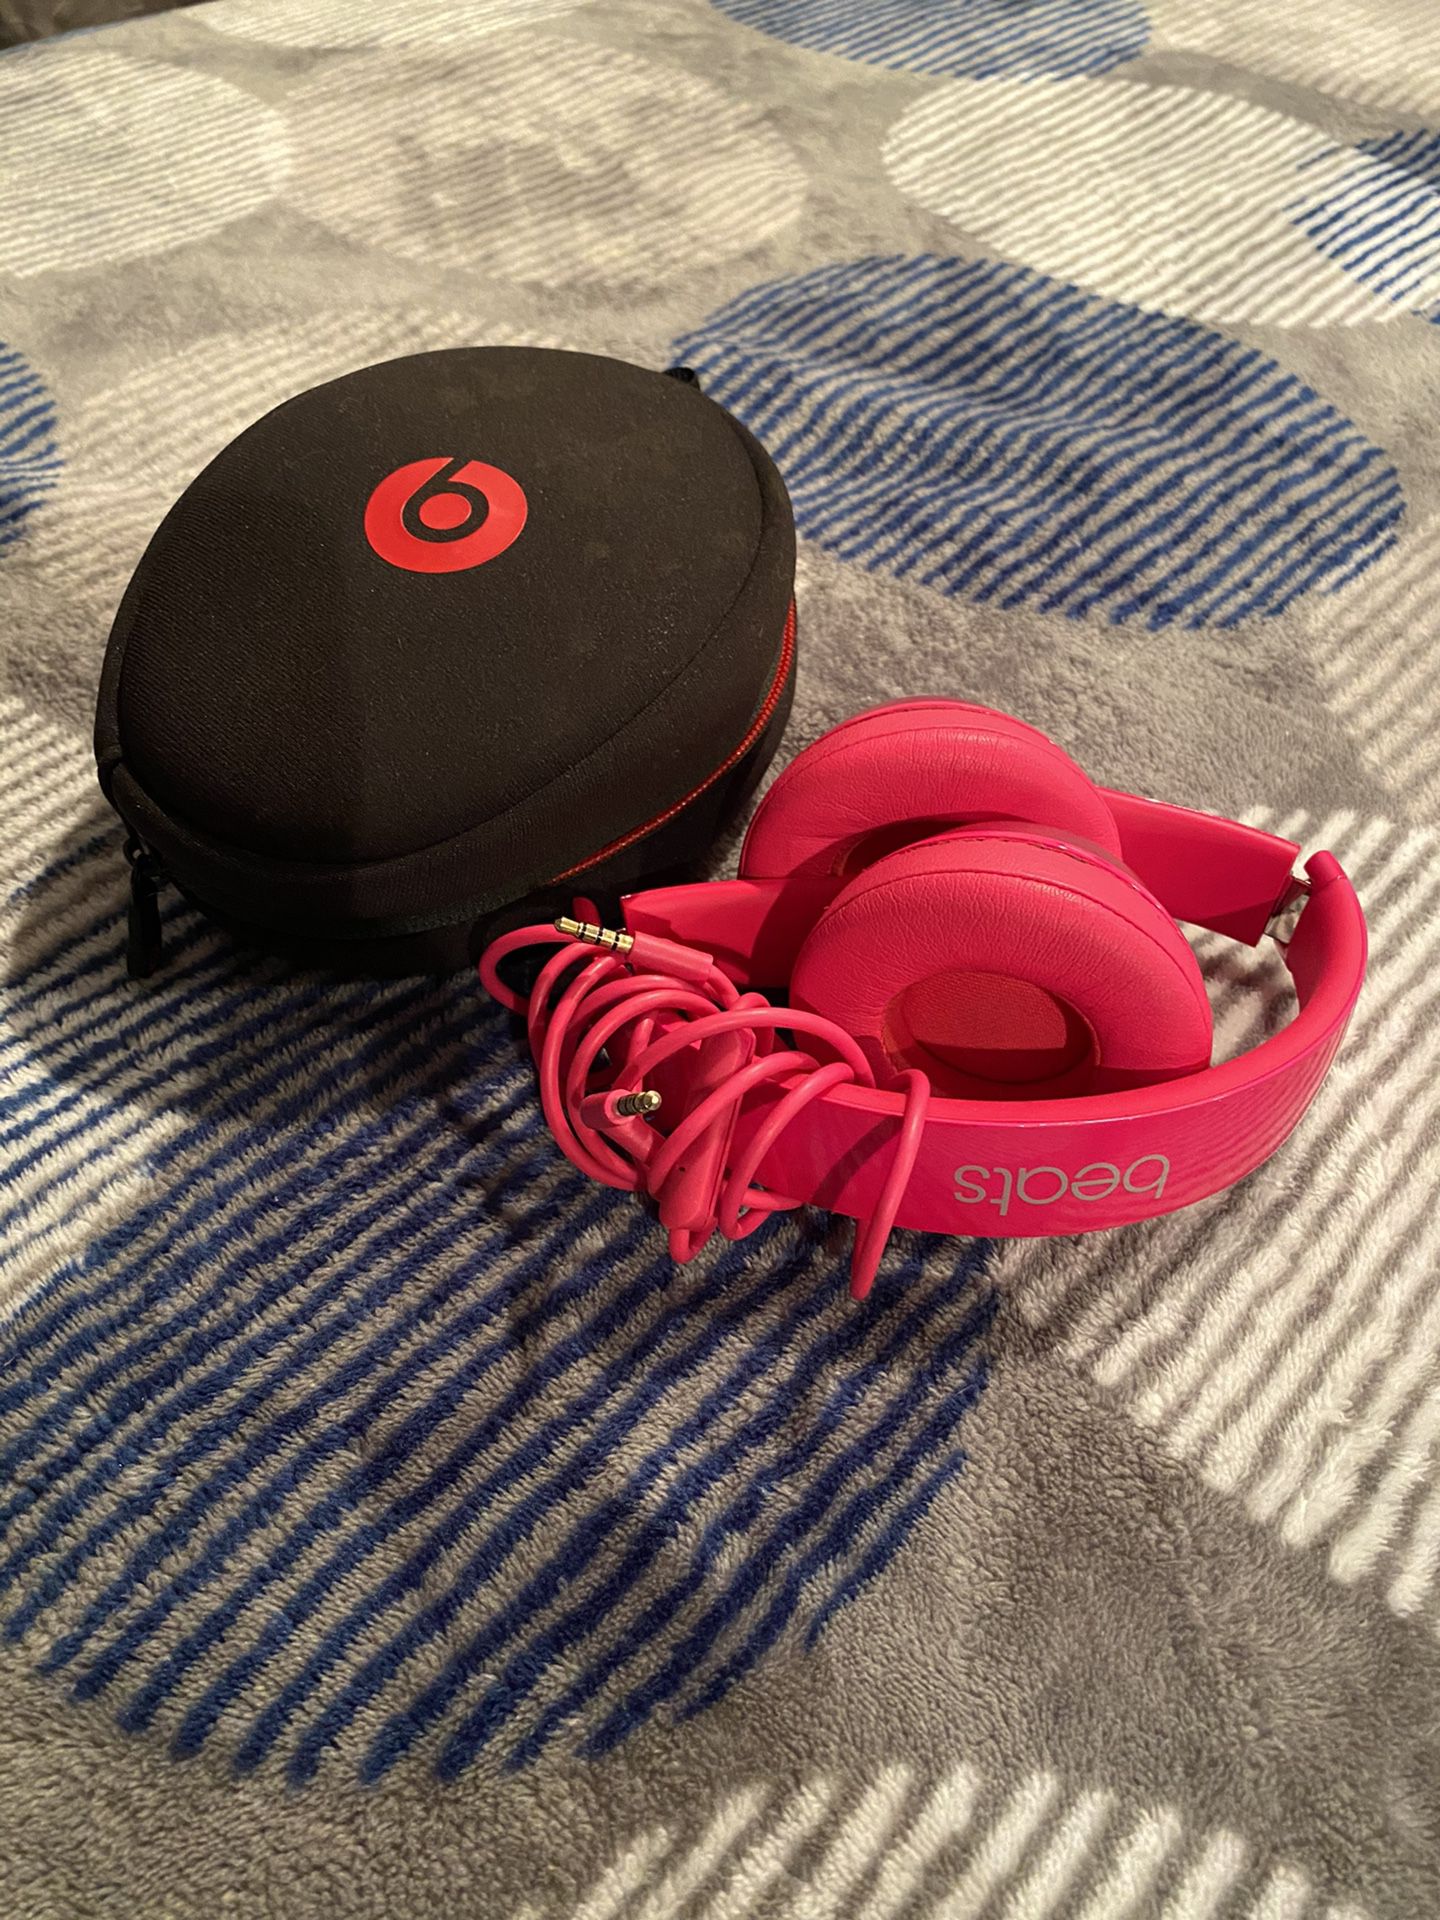 Hot pink wired beats headphones